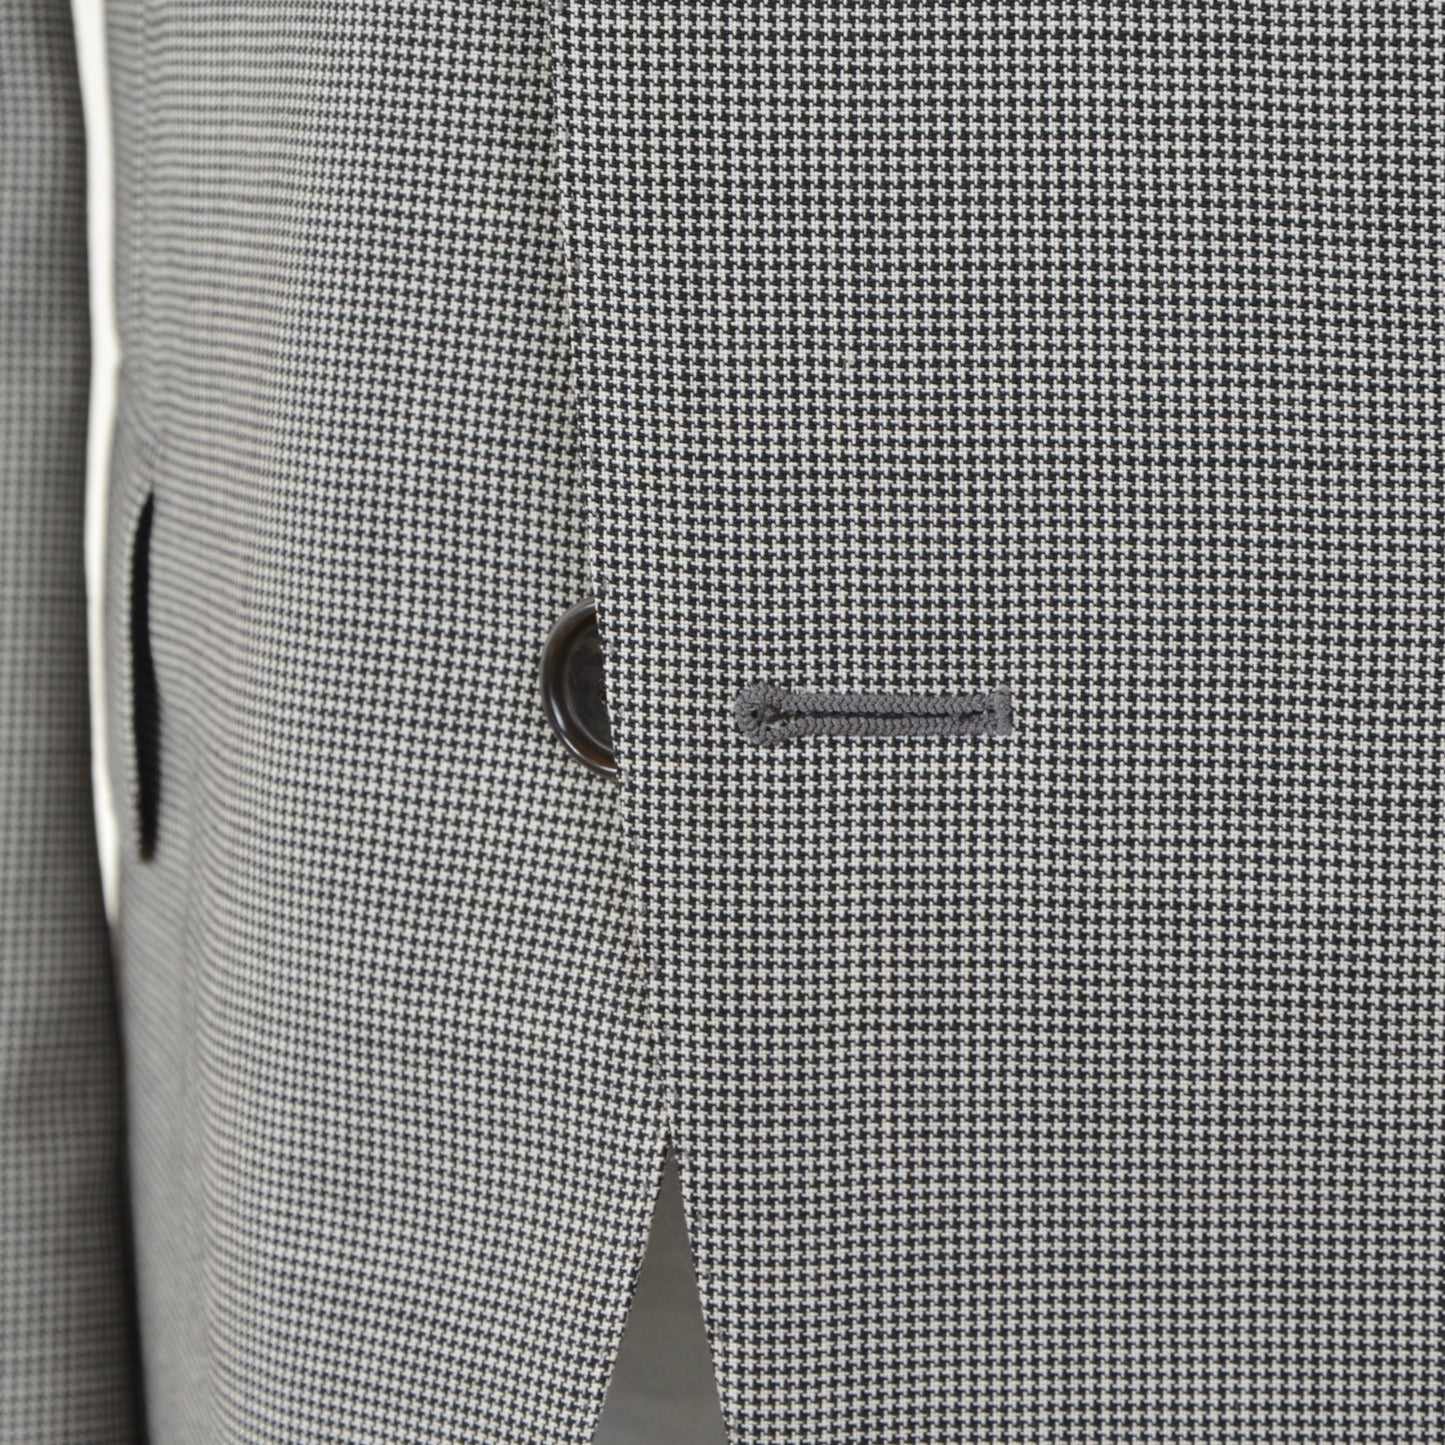 Raffaele Caruso Super 100s Suit Size 52 - Micro Houndstooth